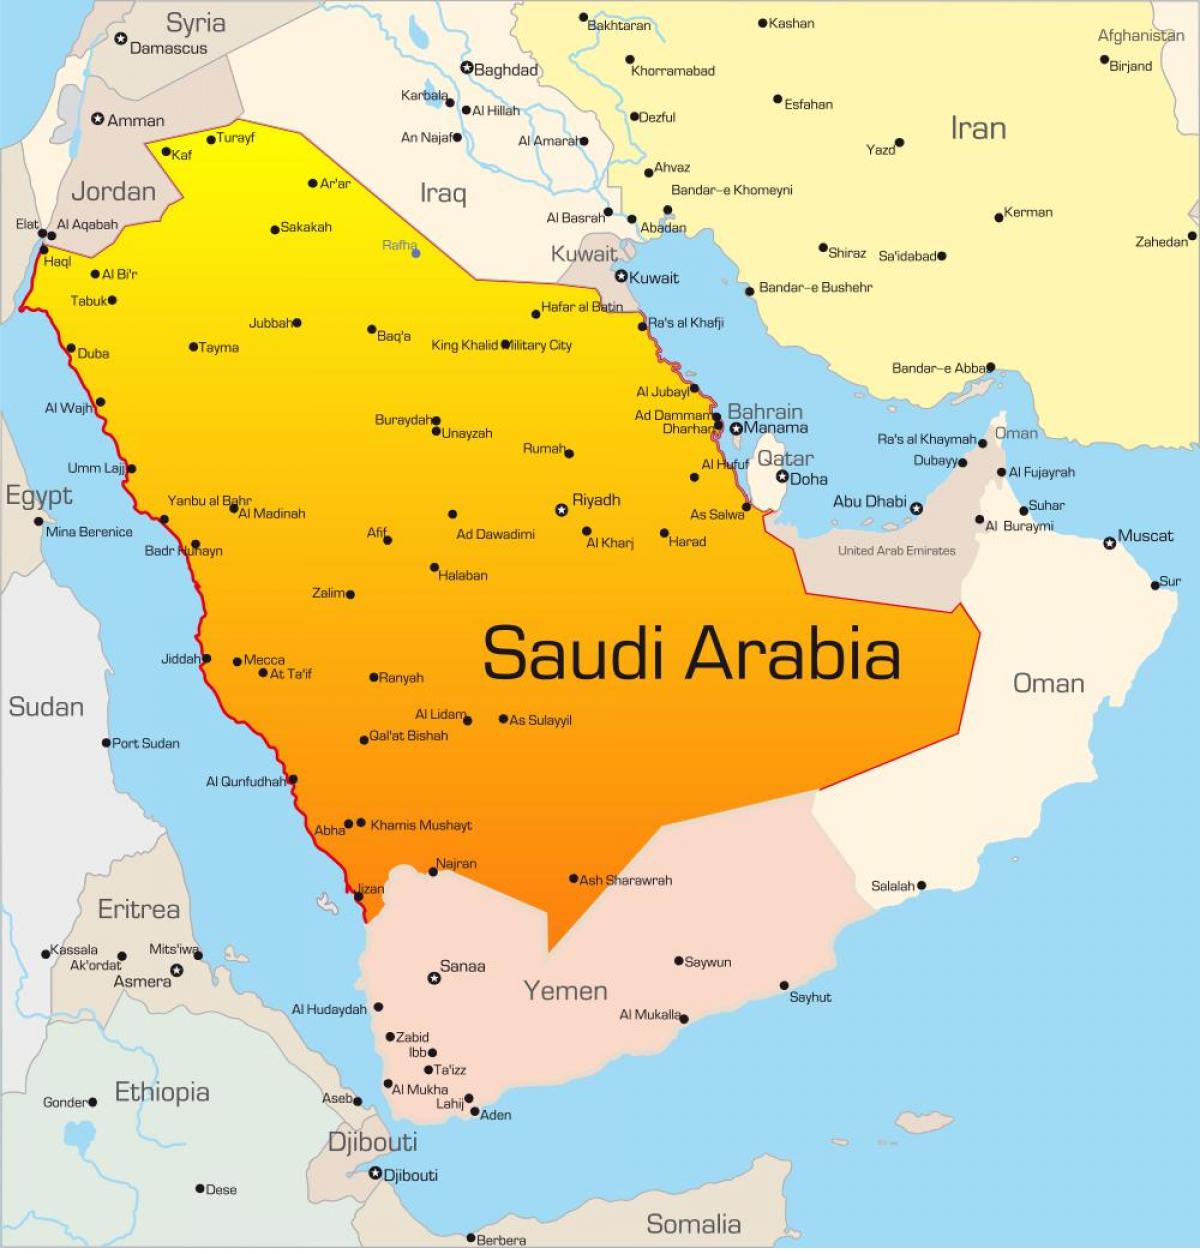 Meca na arábia saudita mapa